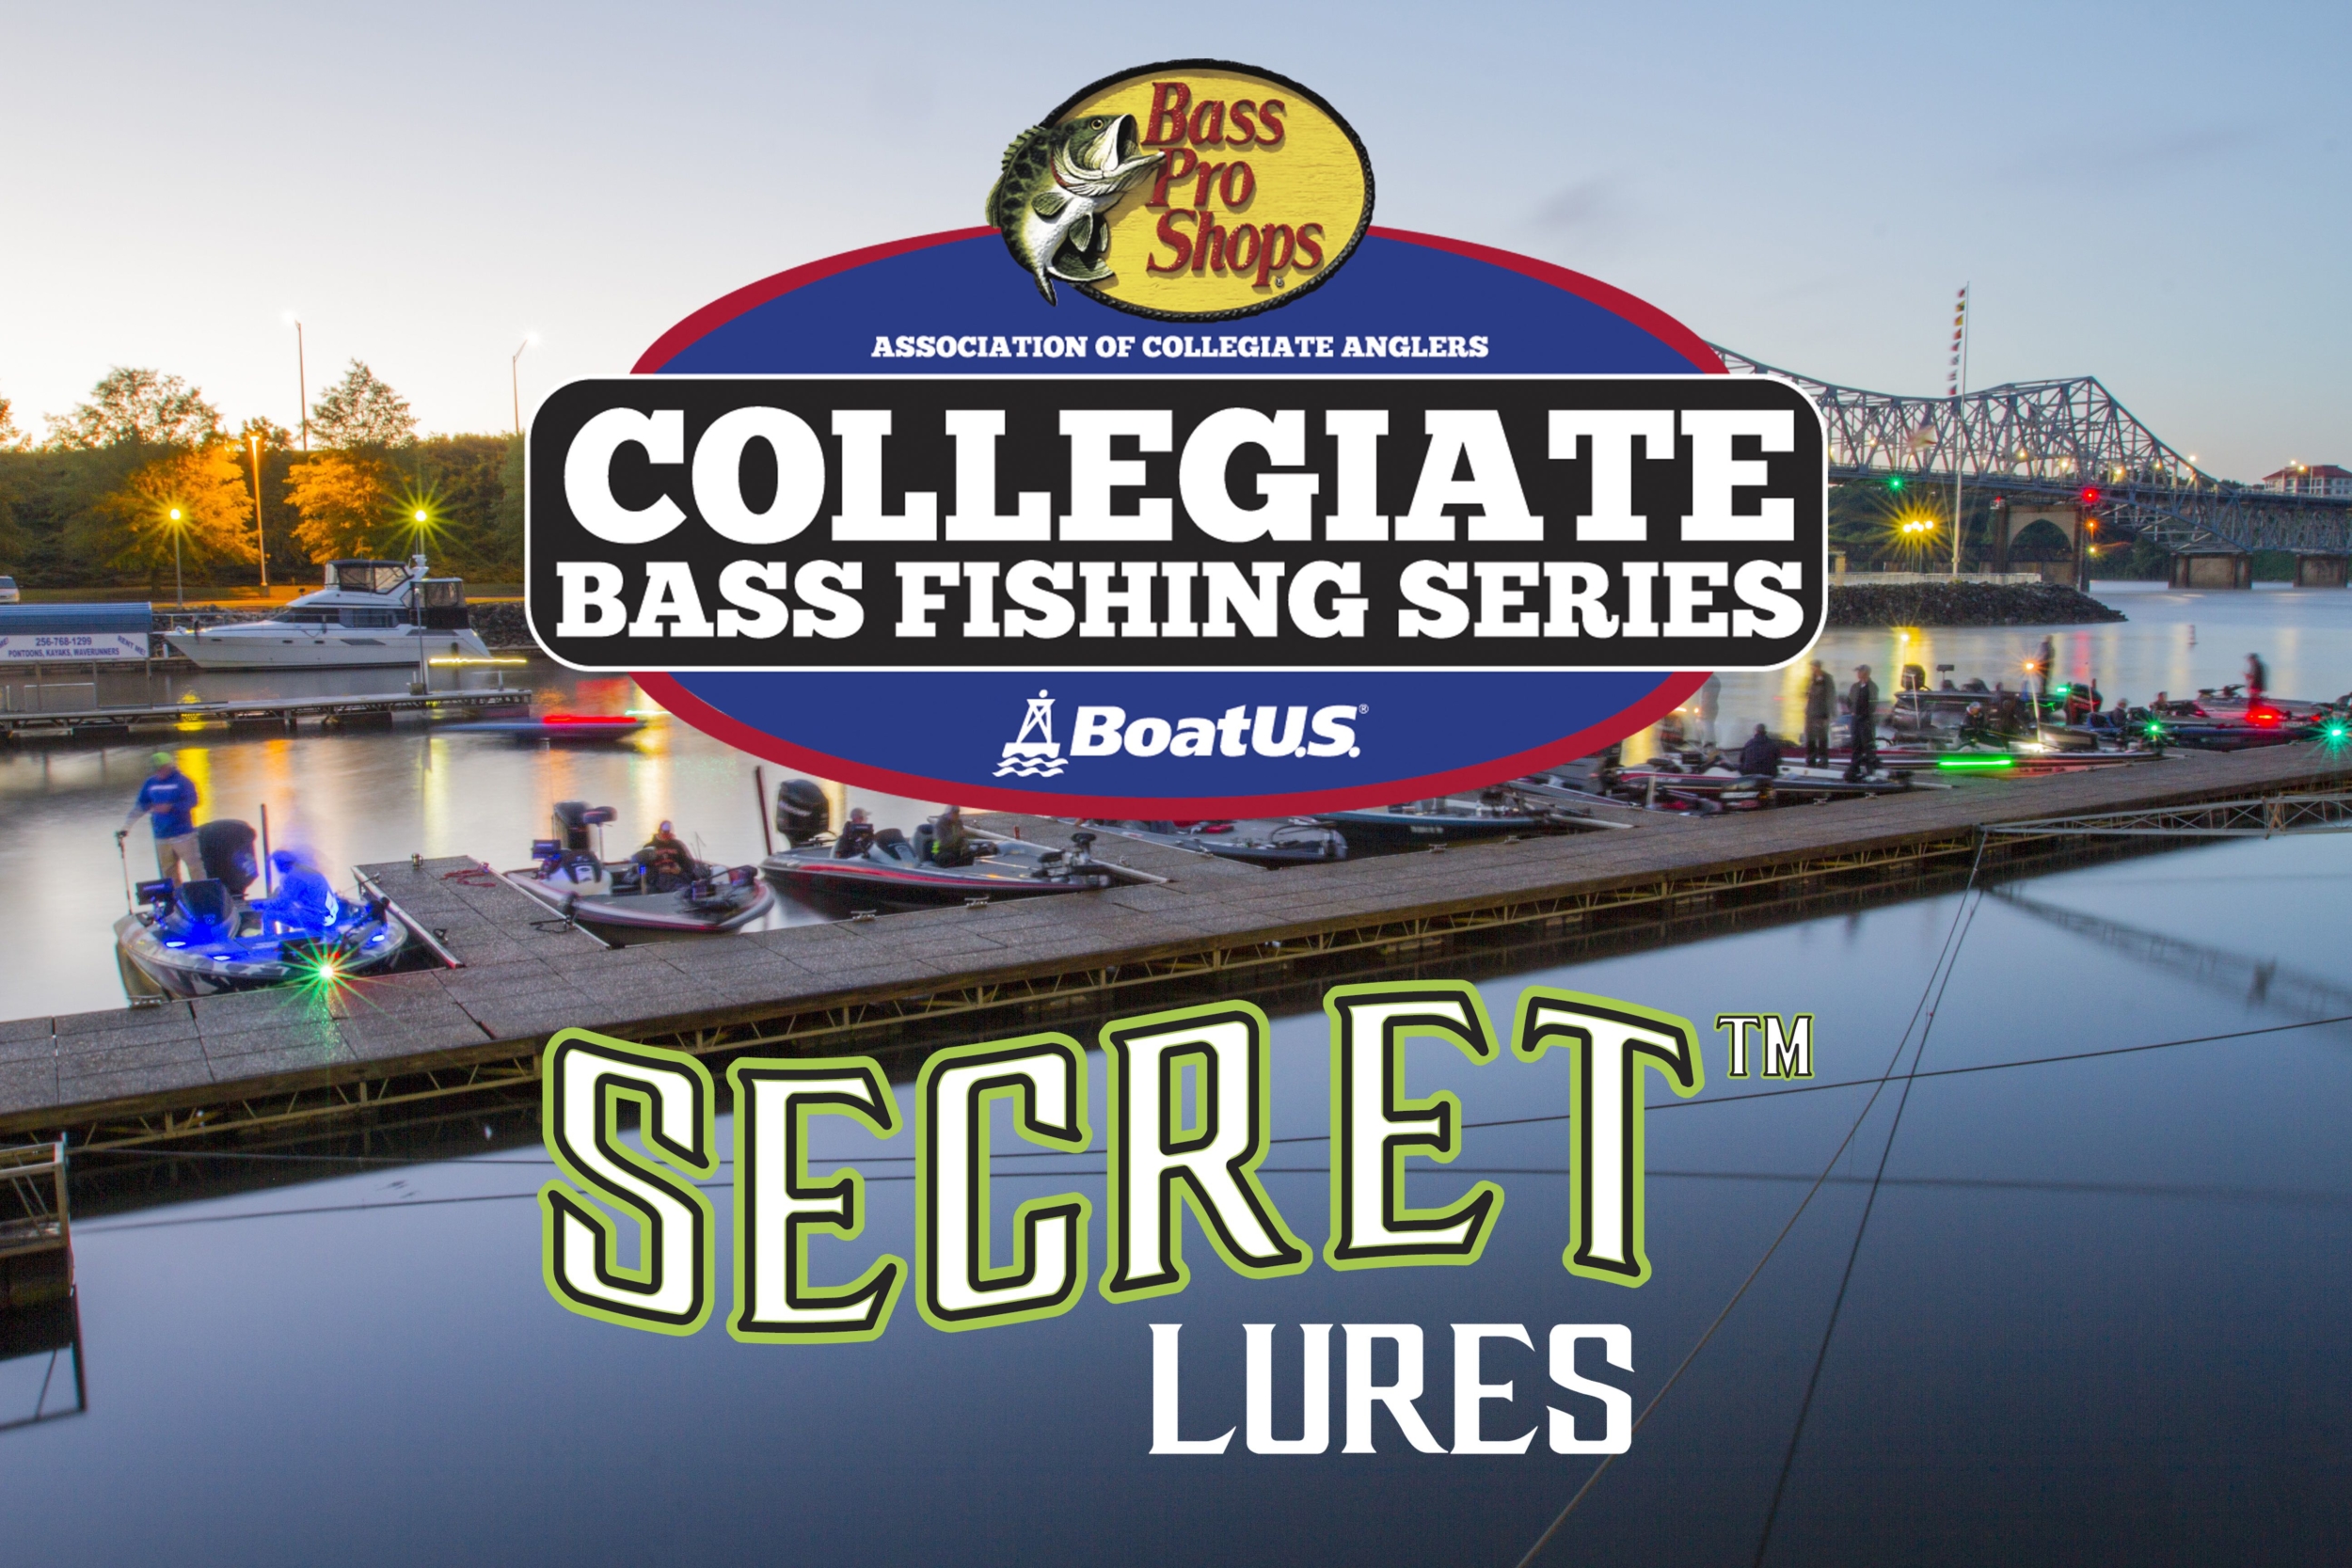 Secret Lures to Sponsor Bass Pro Shops Collegiate Bass Fishing